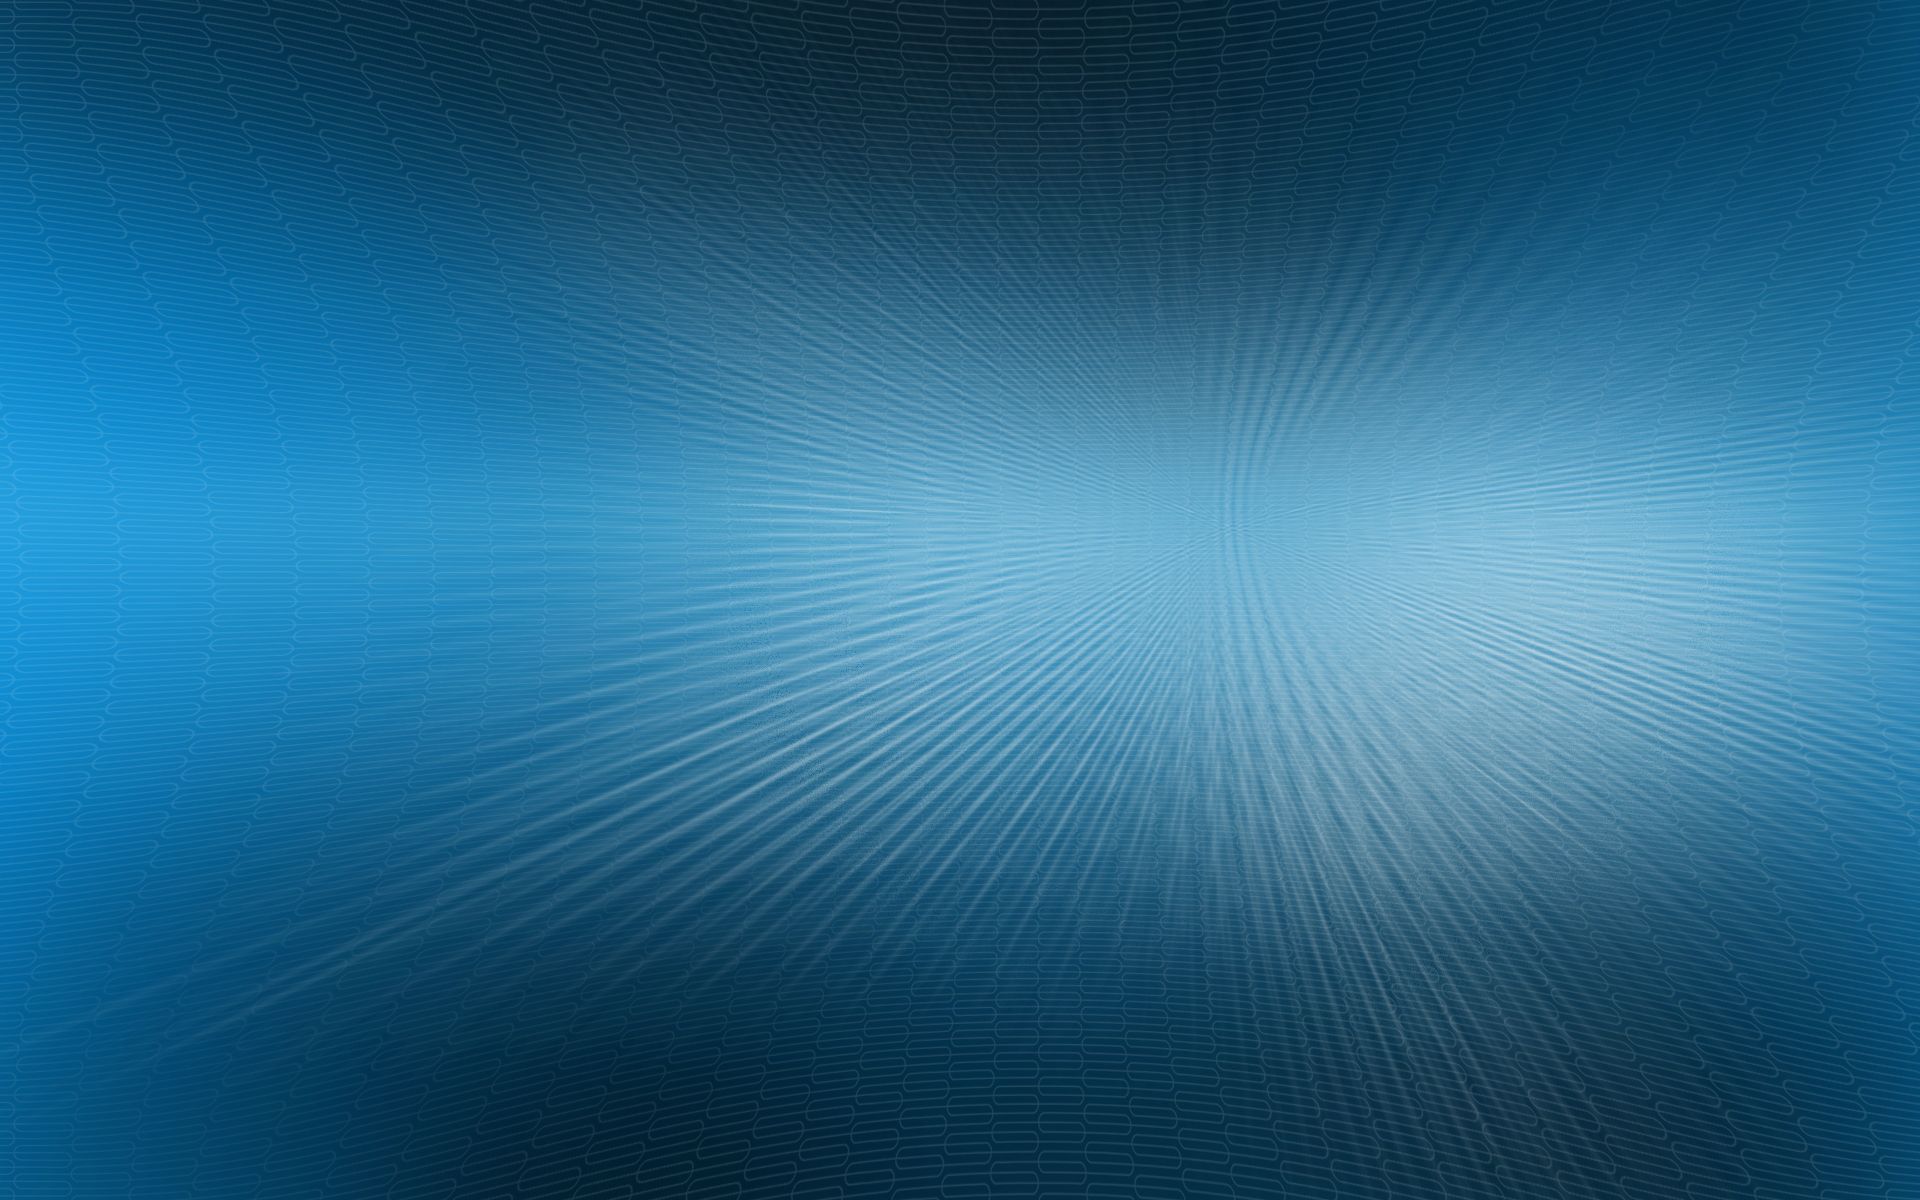 Hewlett Packard Background. Hewlett Packard Wallpaper, Hewlett Packard Wallpaper Windows 7 And Hewlett Packard Background Ocean